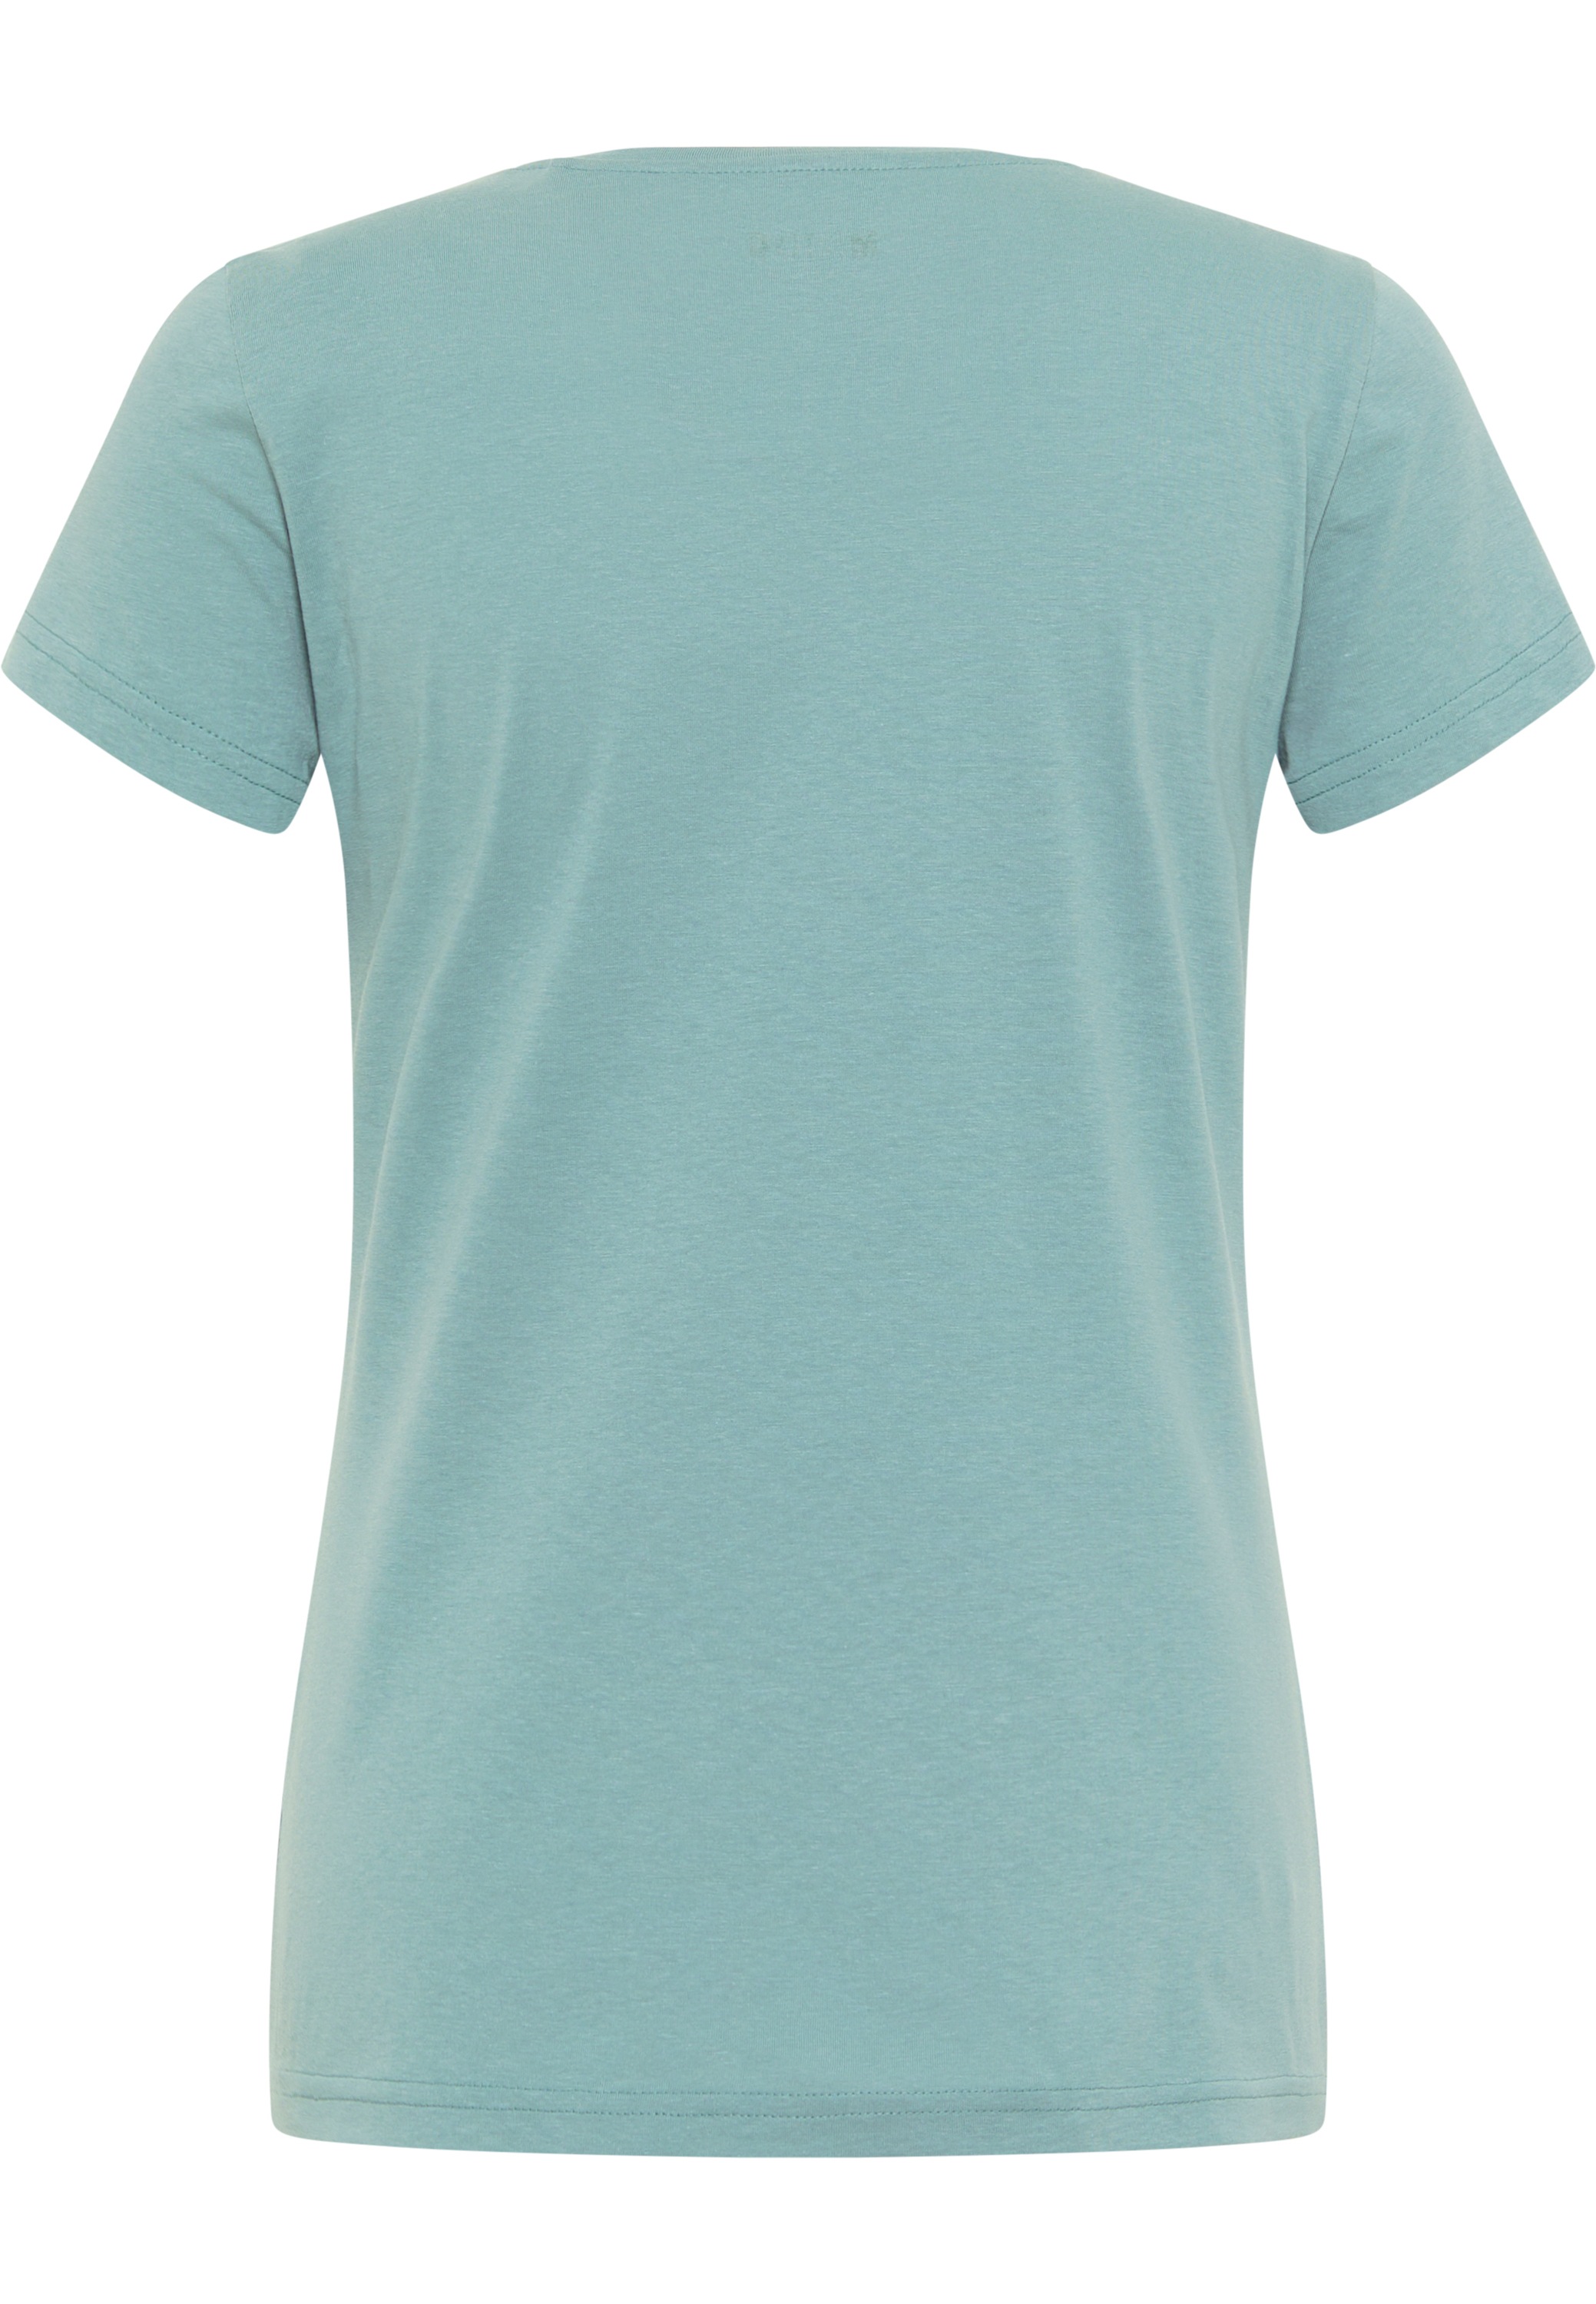 MUSTANG | BAUR »Style C Alexia Print« T-Shirt kaufen online